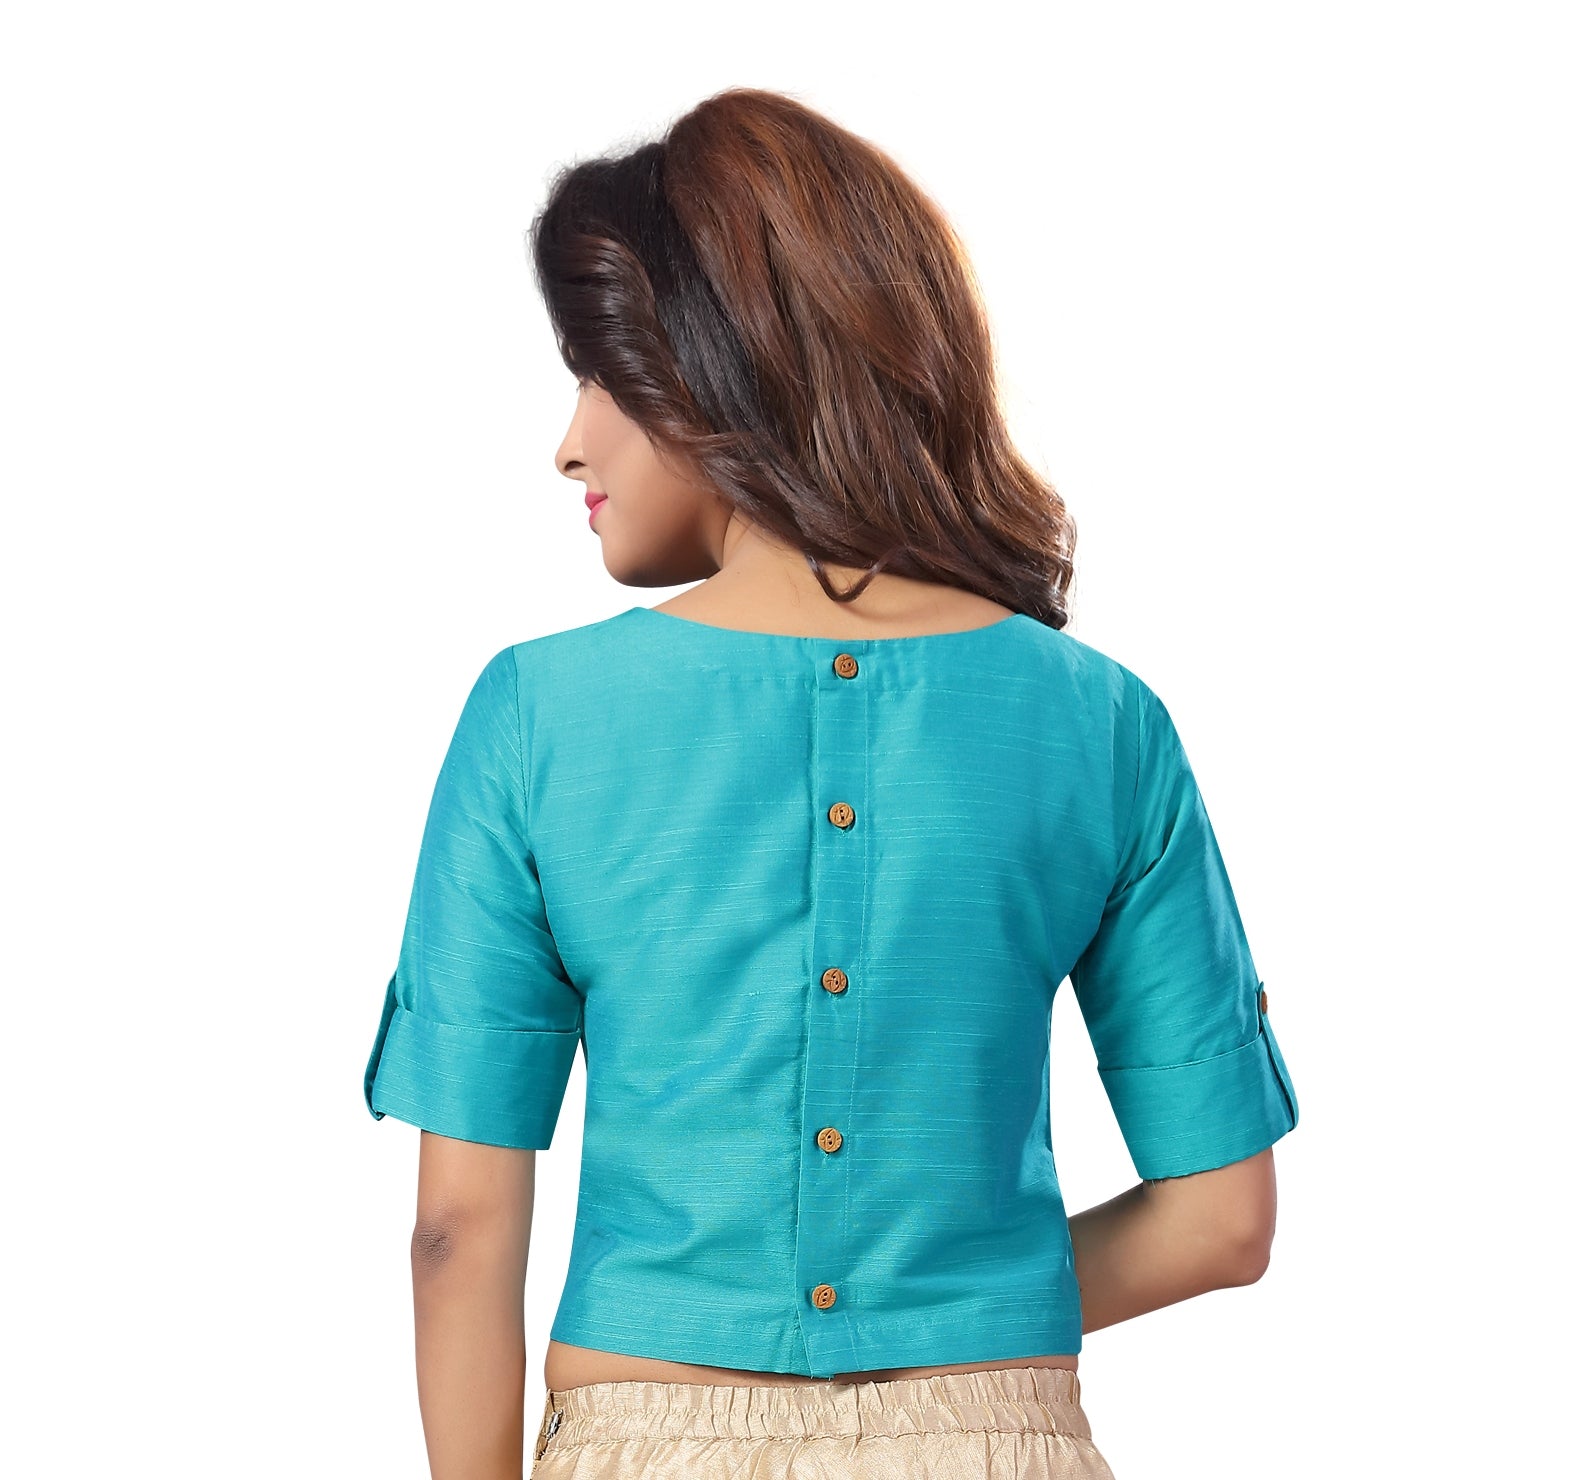 Buy Indian Saree Blouse Designs Online, Ethnic Designer Blouse